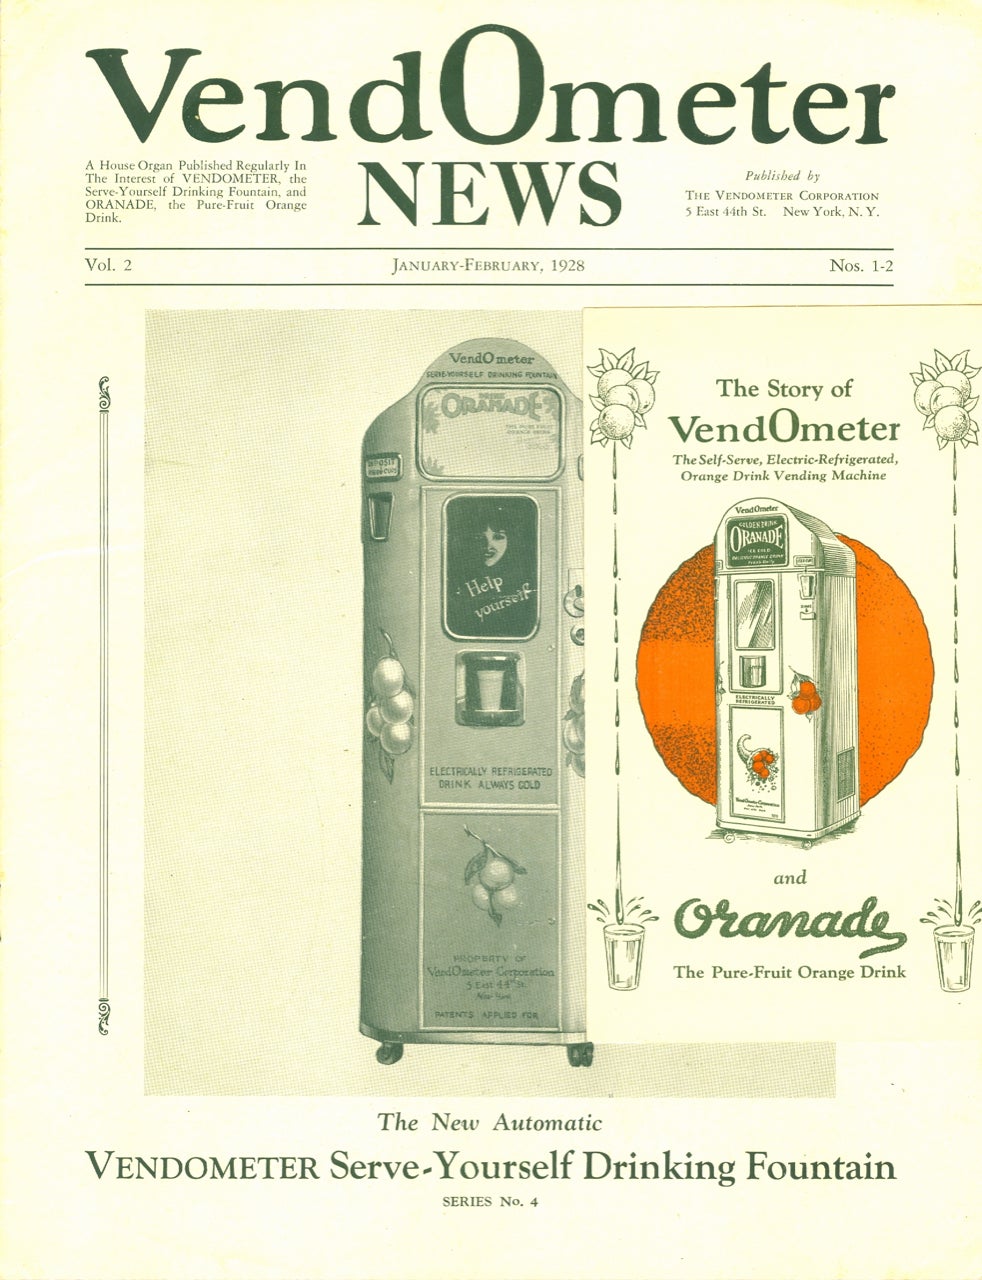 Item #3665 The Story of VendOmeter: The Self-Serve, Electric-Refrigerated, Orange Drink Vending Machine [and] VendOmeter News. Vol. 2. January-February 1928. Nos. 1-2. The Vendometer Corporation.